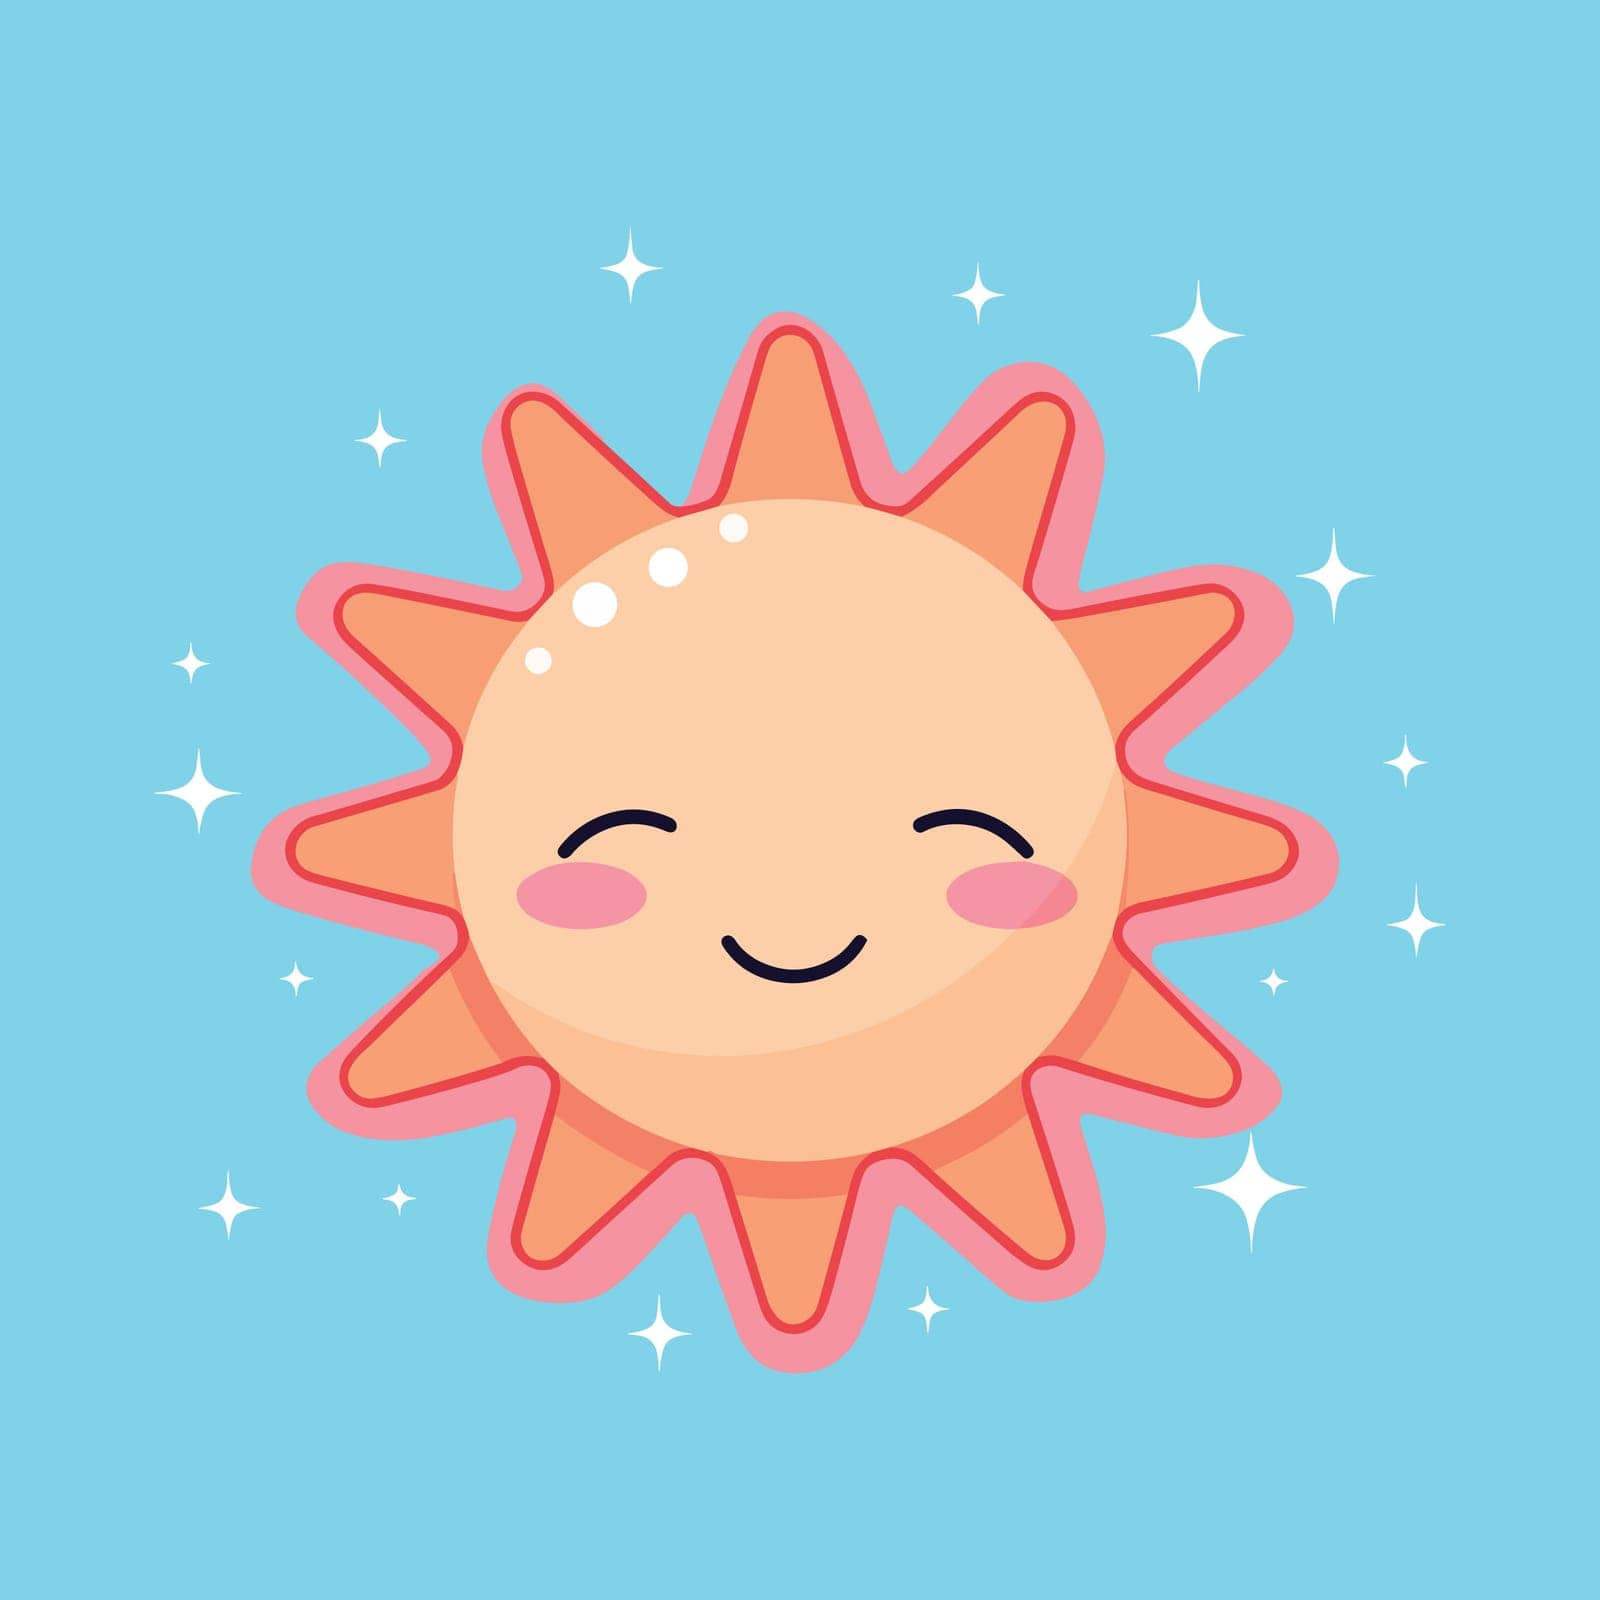 Cute sun in boho style in pastel colors